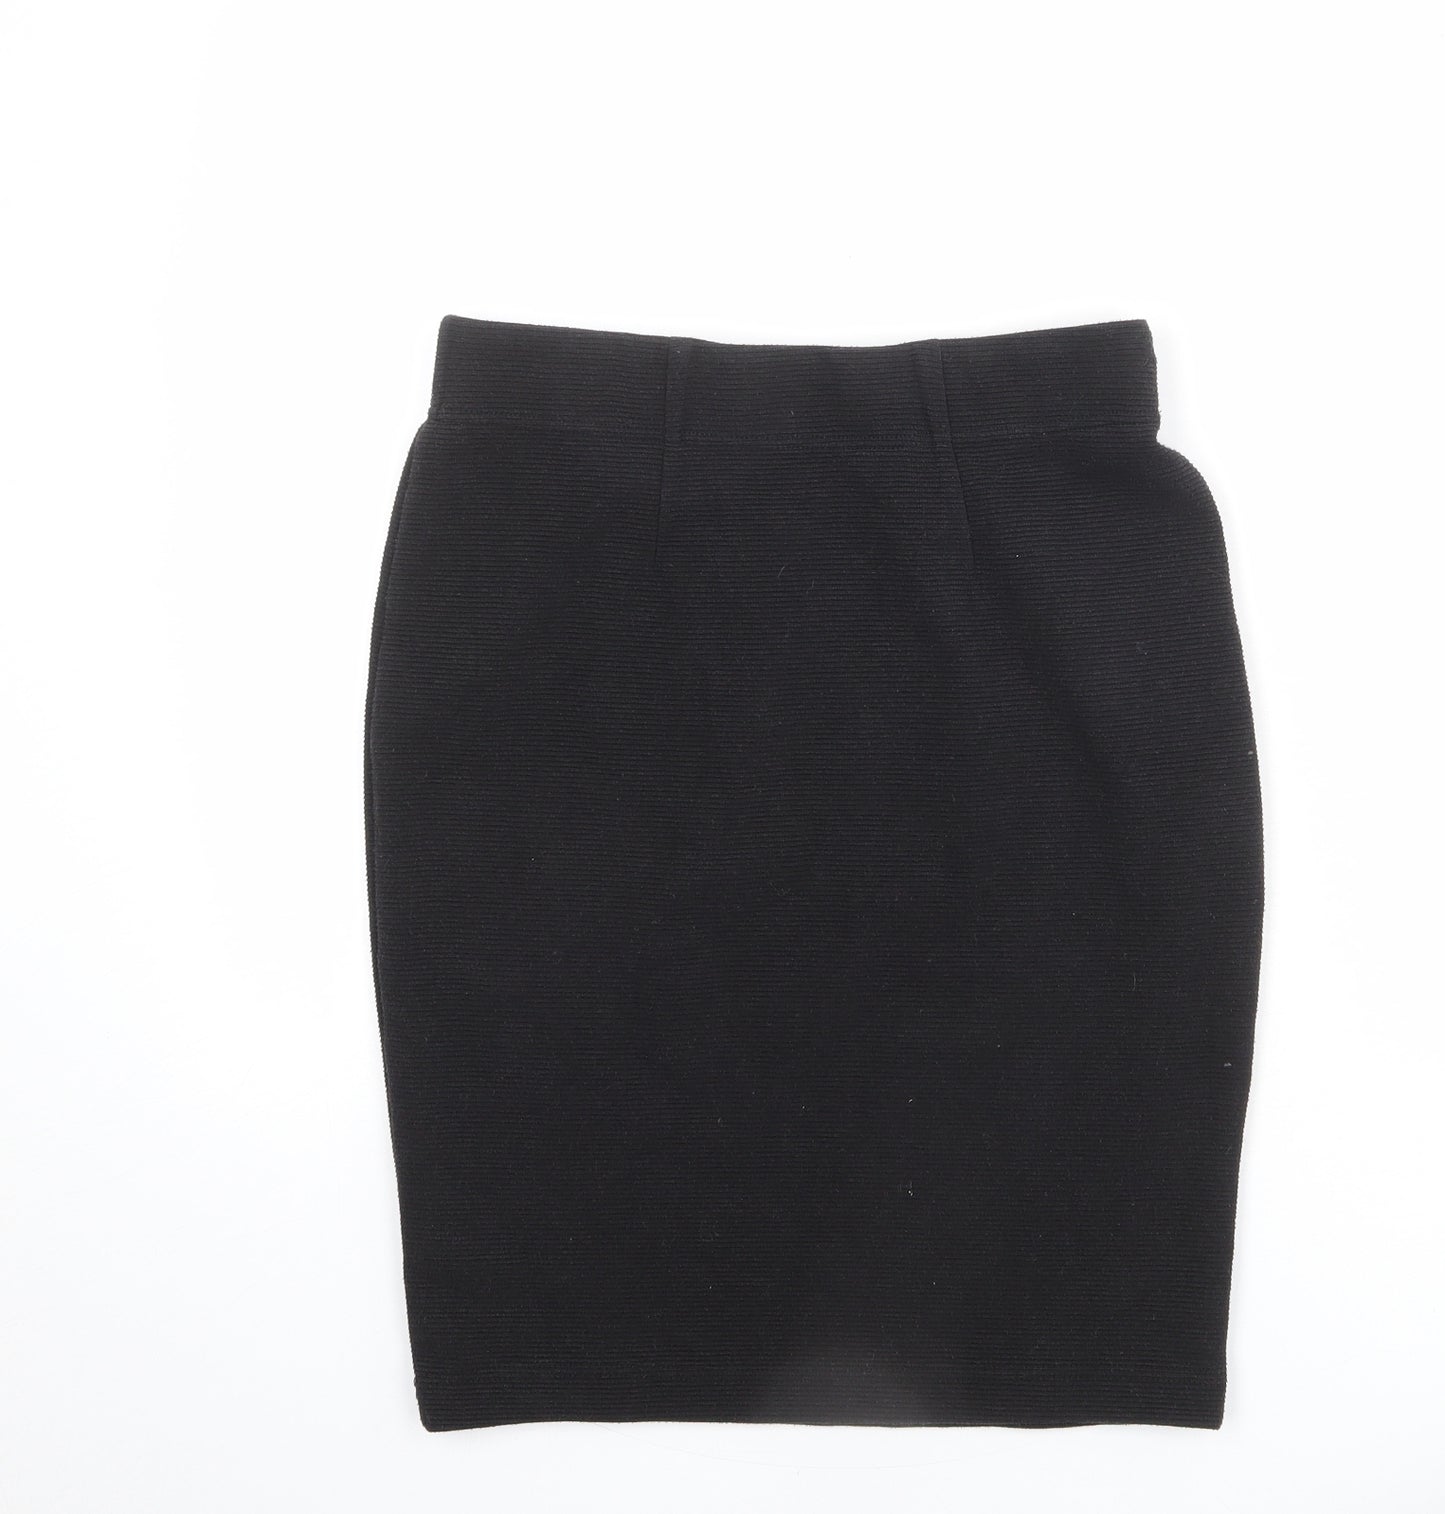 Joules Womens Black Polyester Bandage Skirt Size 10